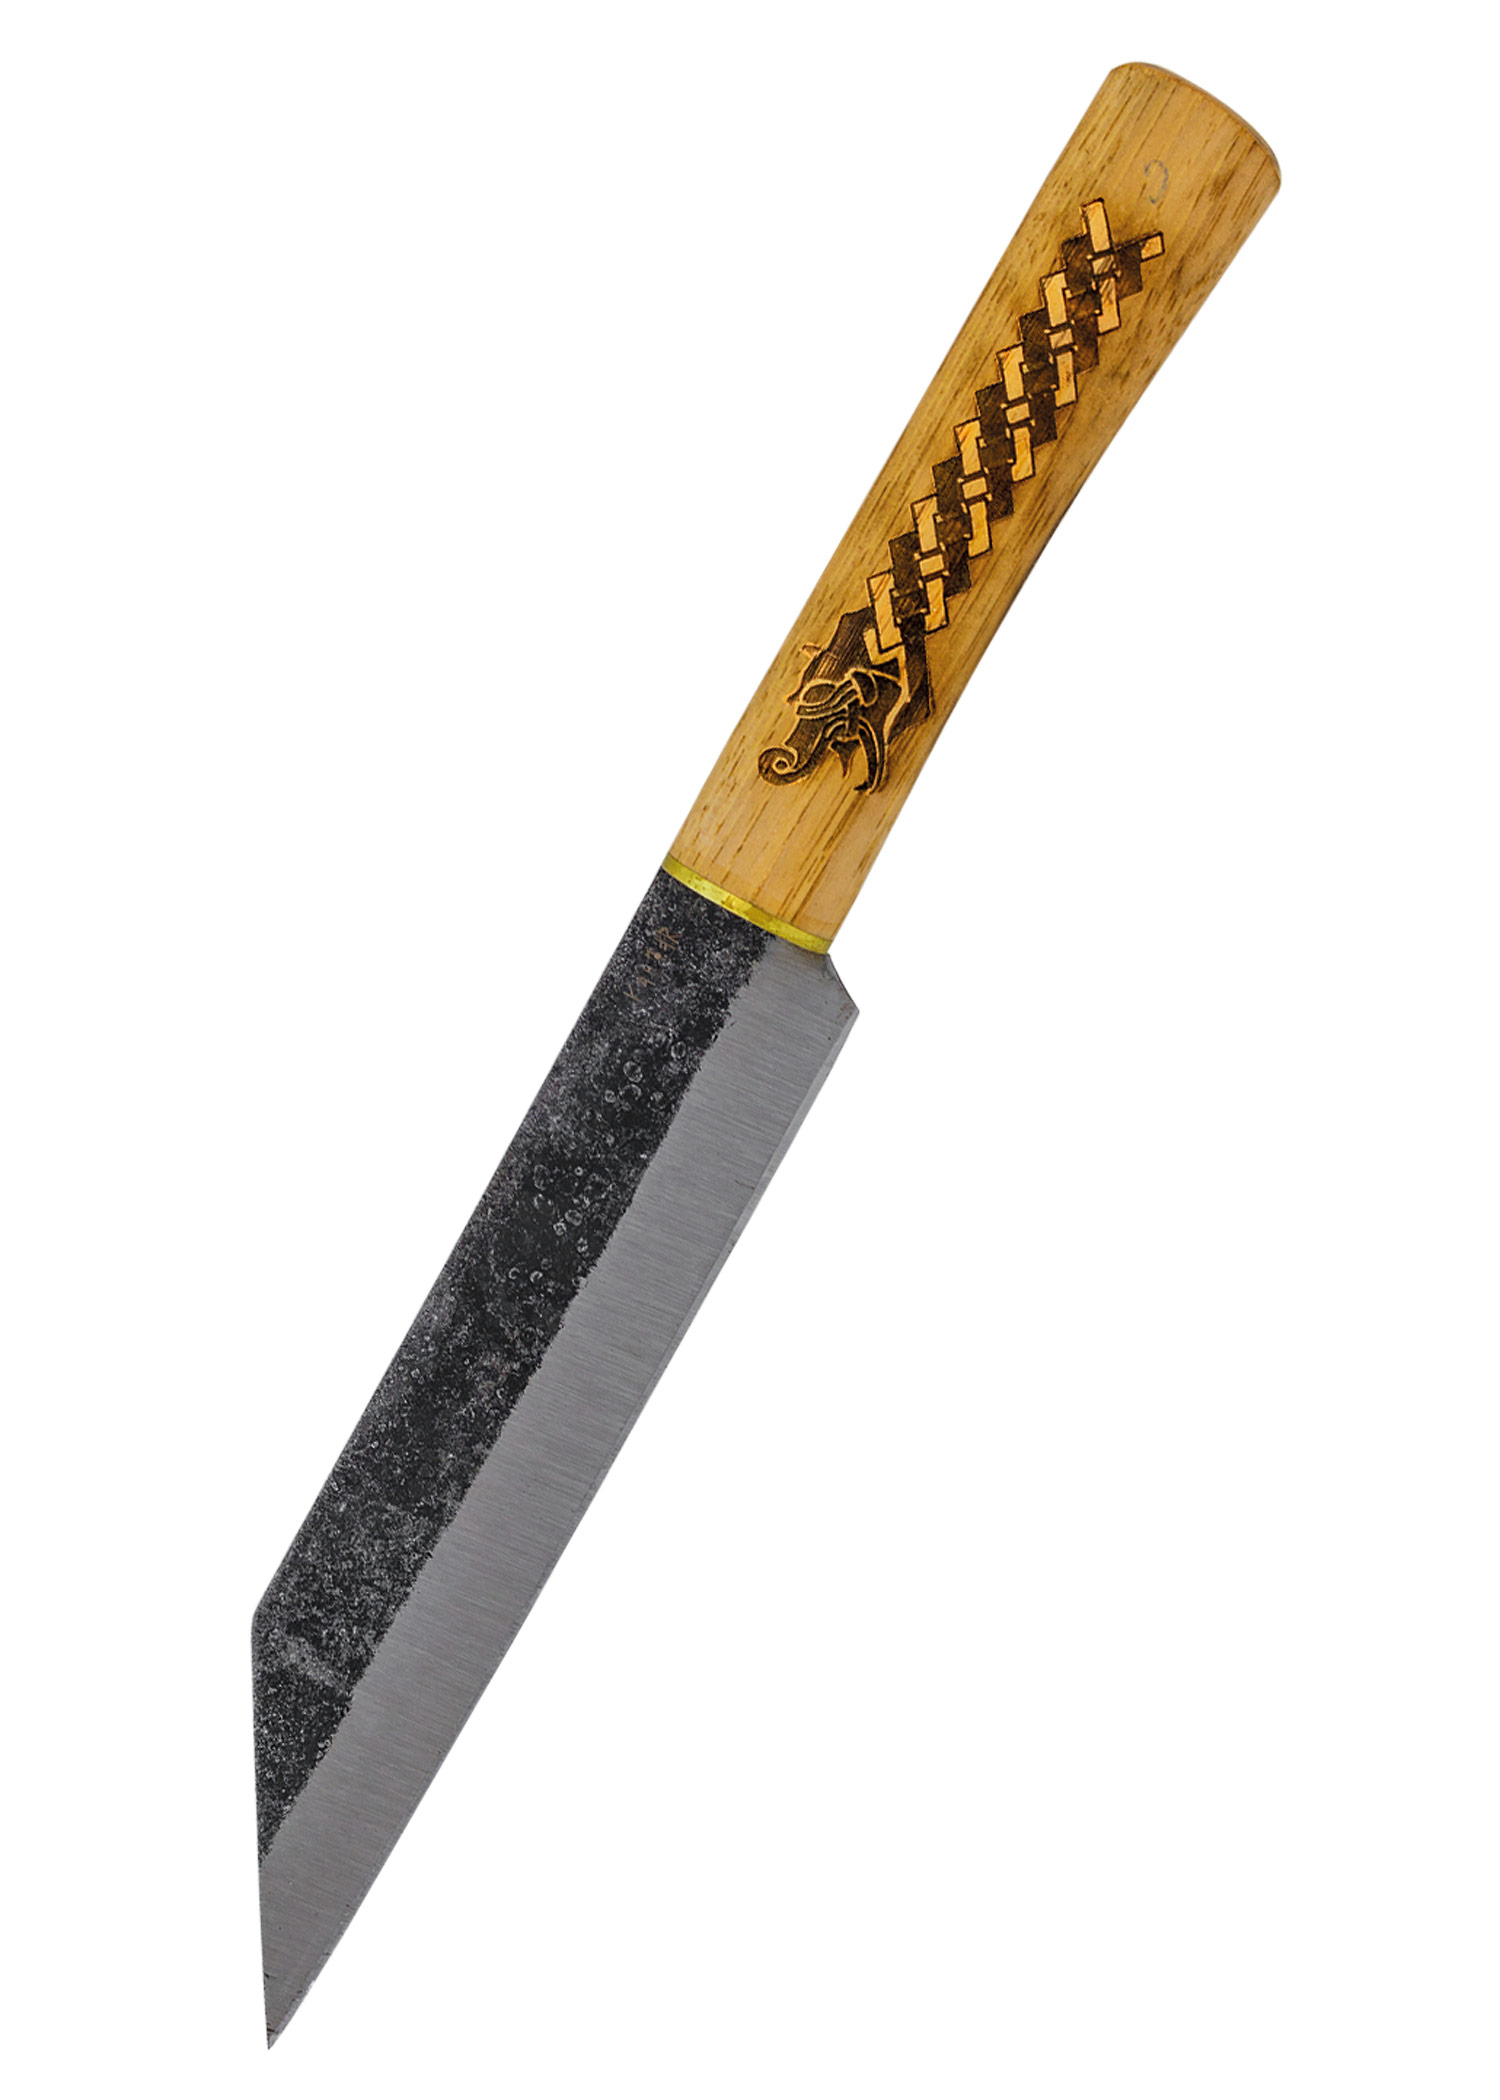 Norse Dragon Seax Knife, Condor